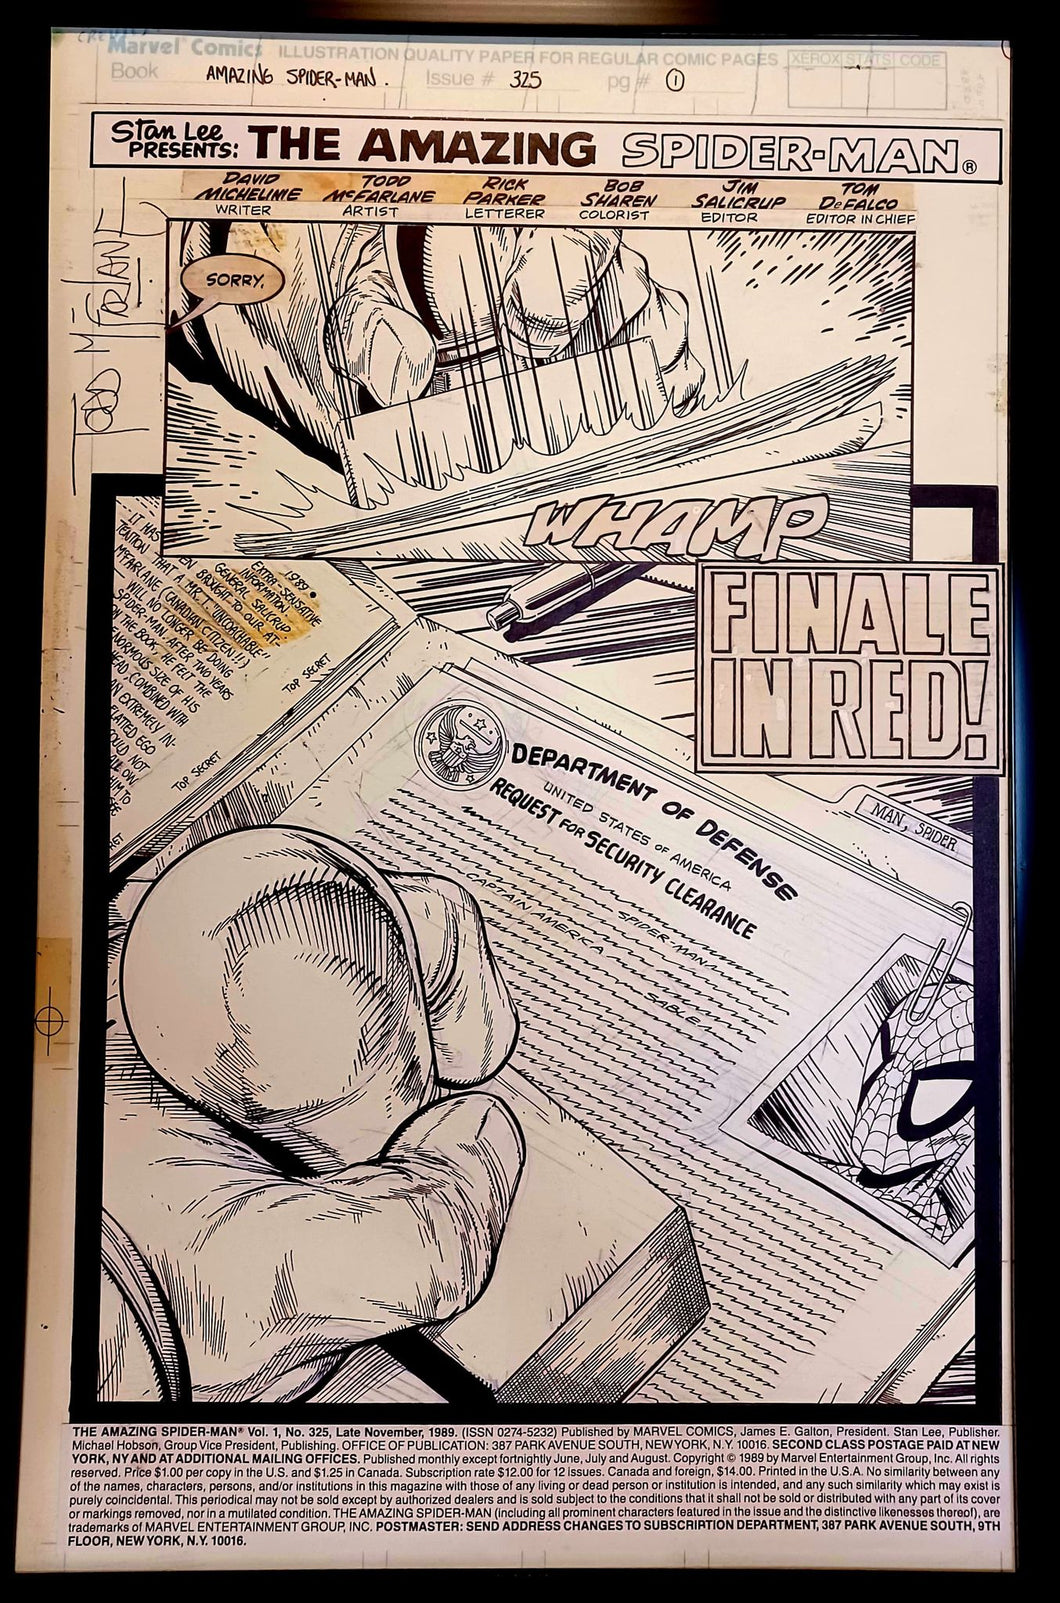 Amazing Spider-Man #325 pg. 1 by Todd McFarlane 11x17 FRAMED Original Art Print Comic Poster